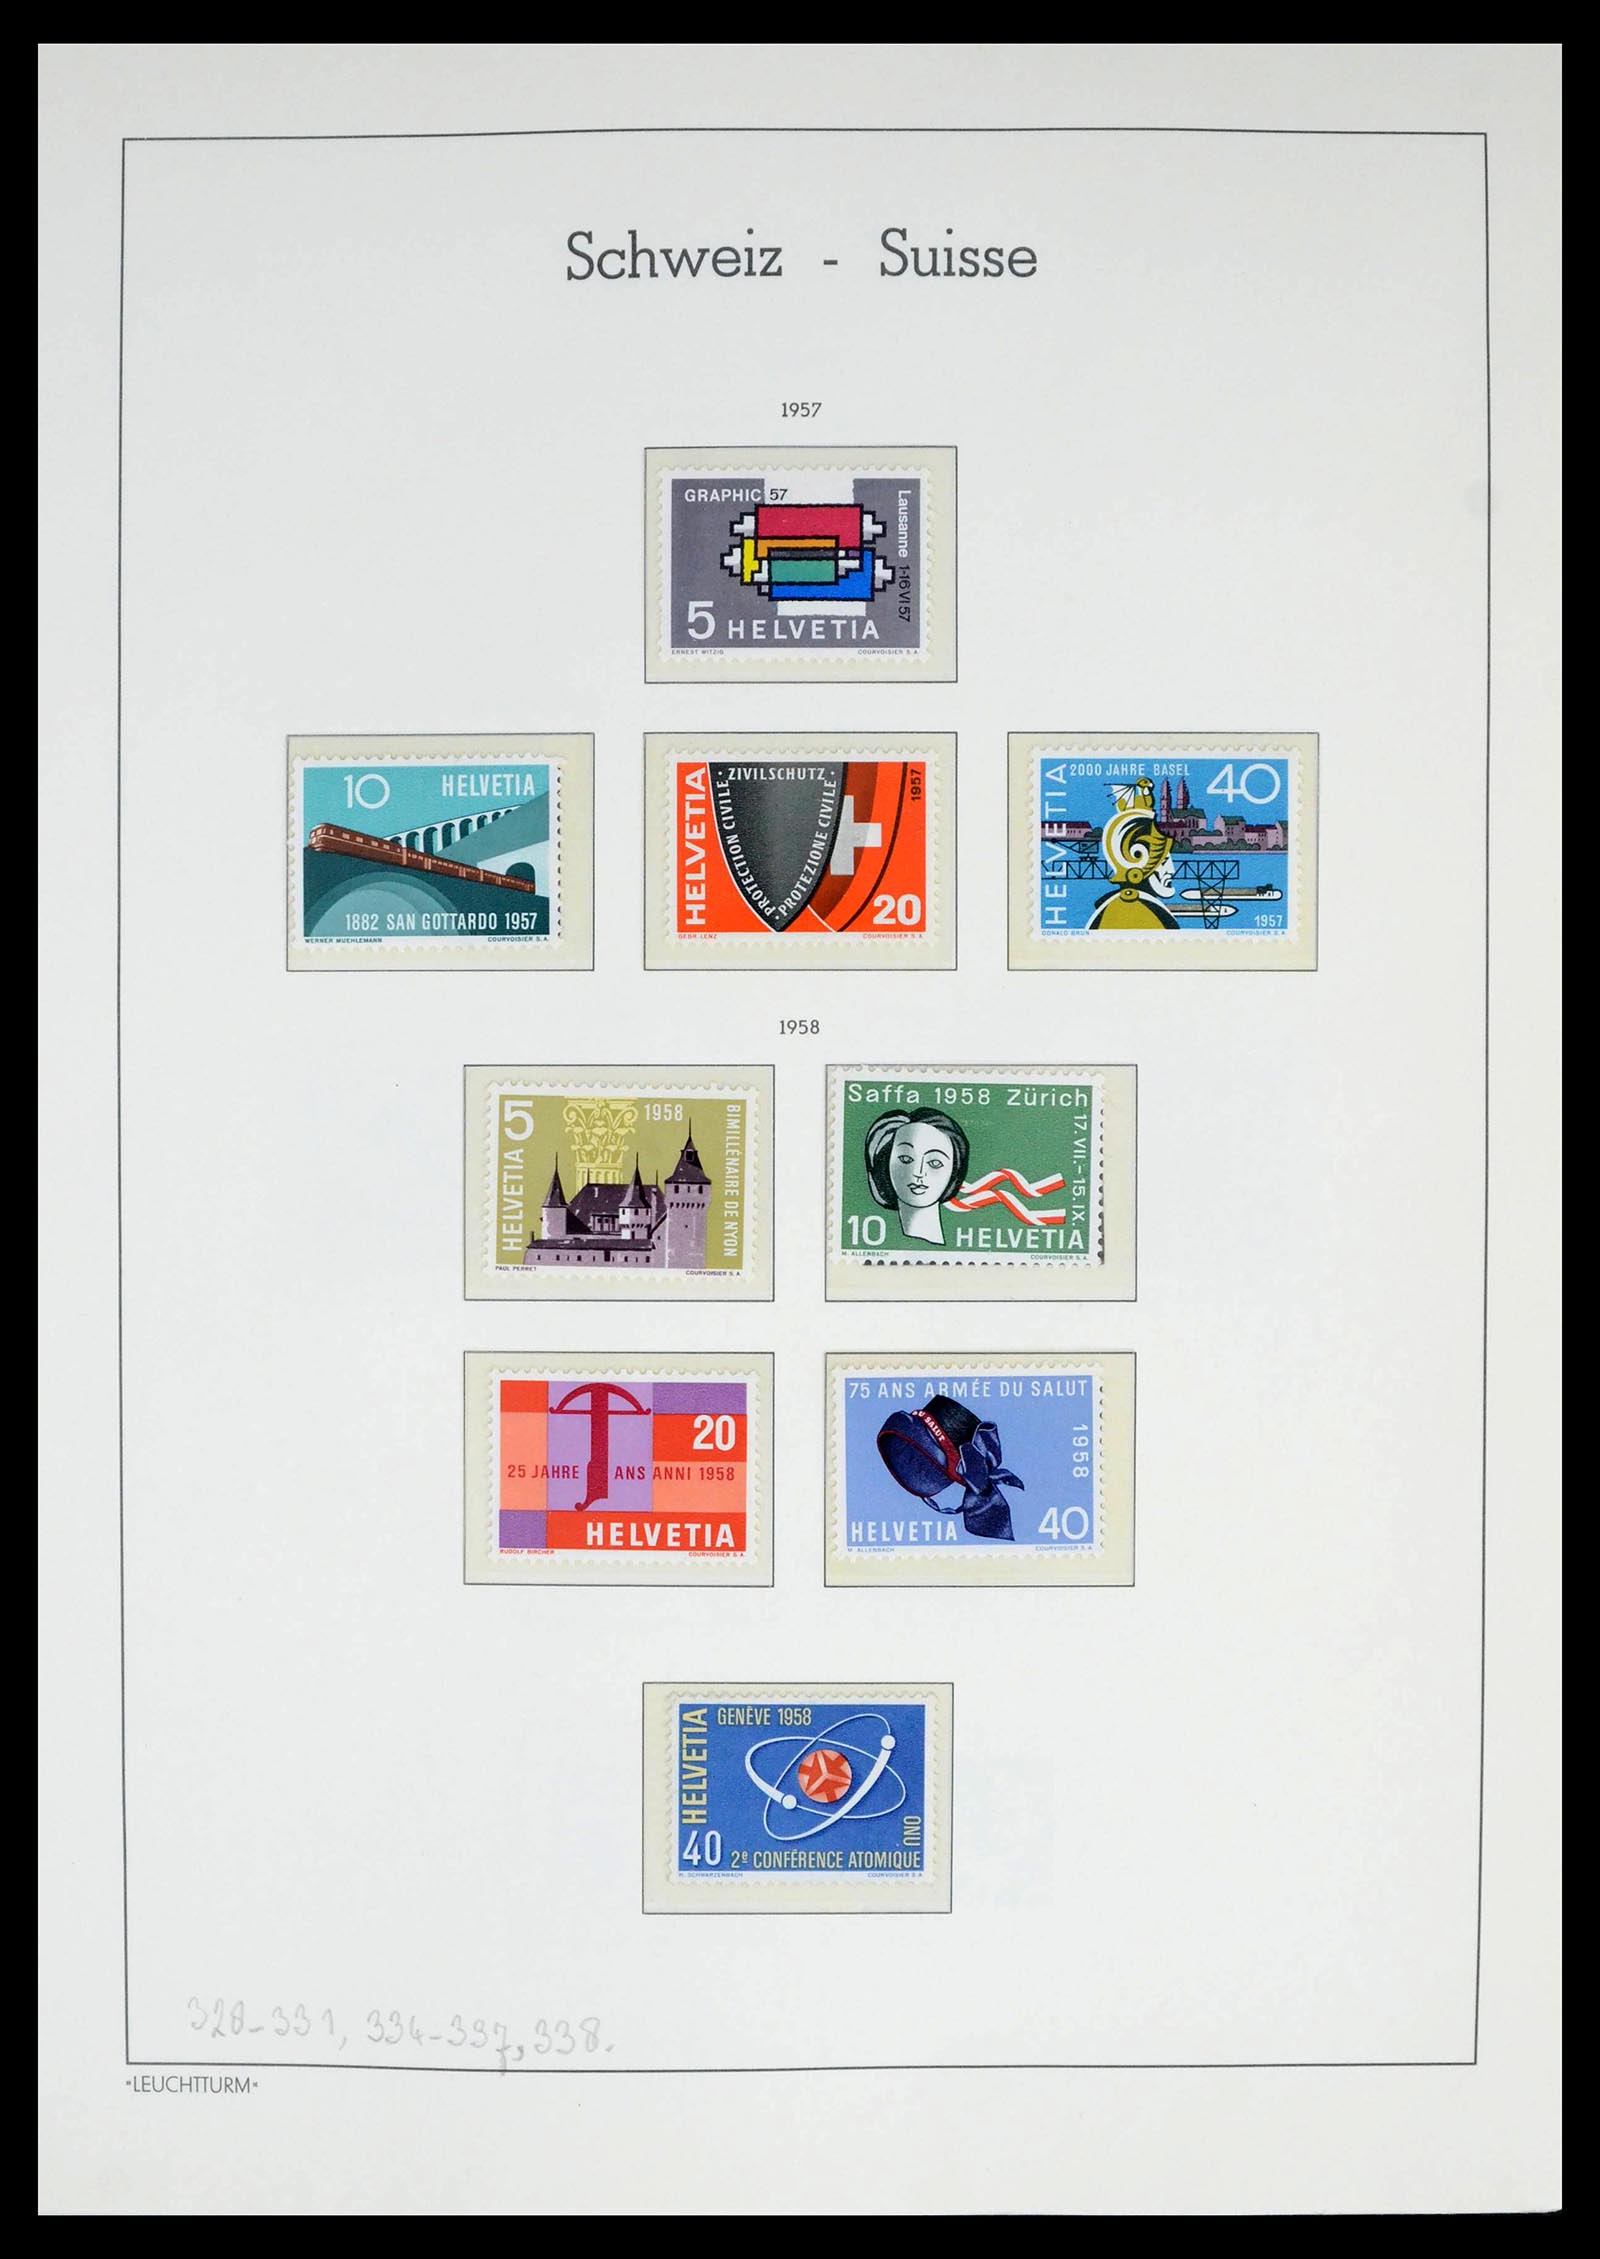 39420 0034 - Stamp collection 39420 Switzerland 1862-1974.